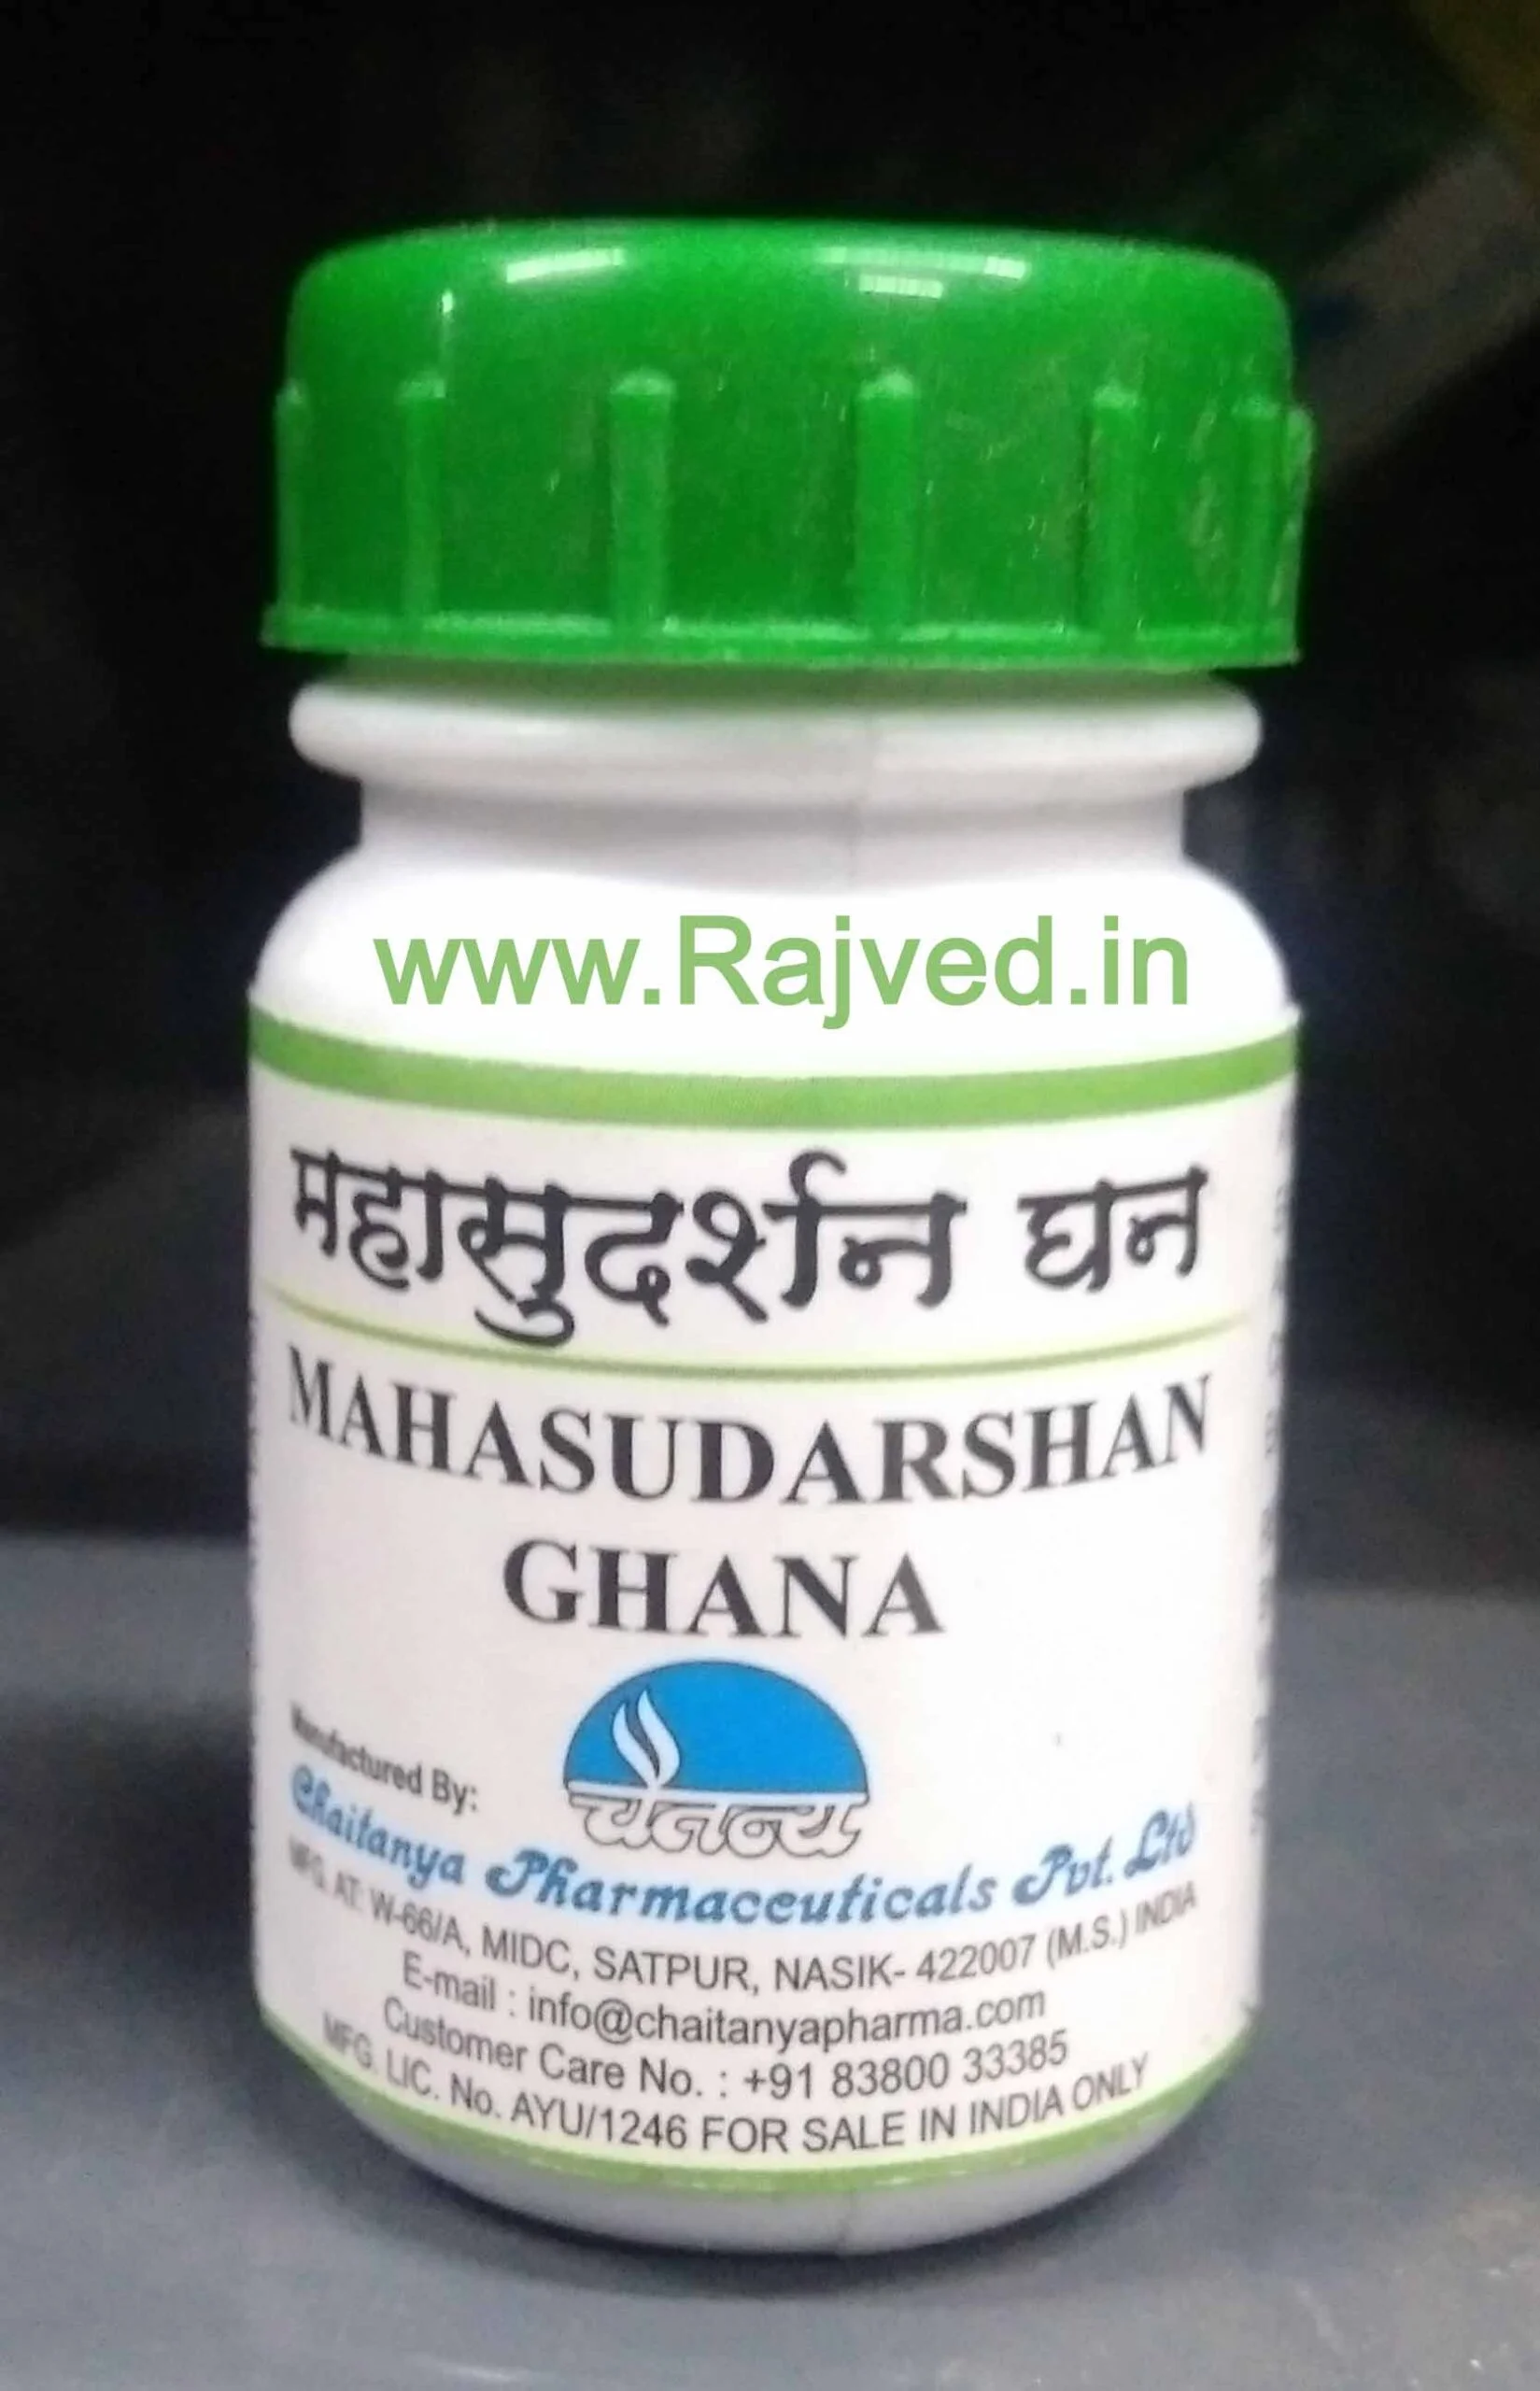 mahasudarshan ghana 60tab upto 20% off chaitanya pharmaceuticals